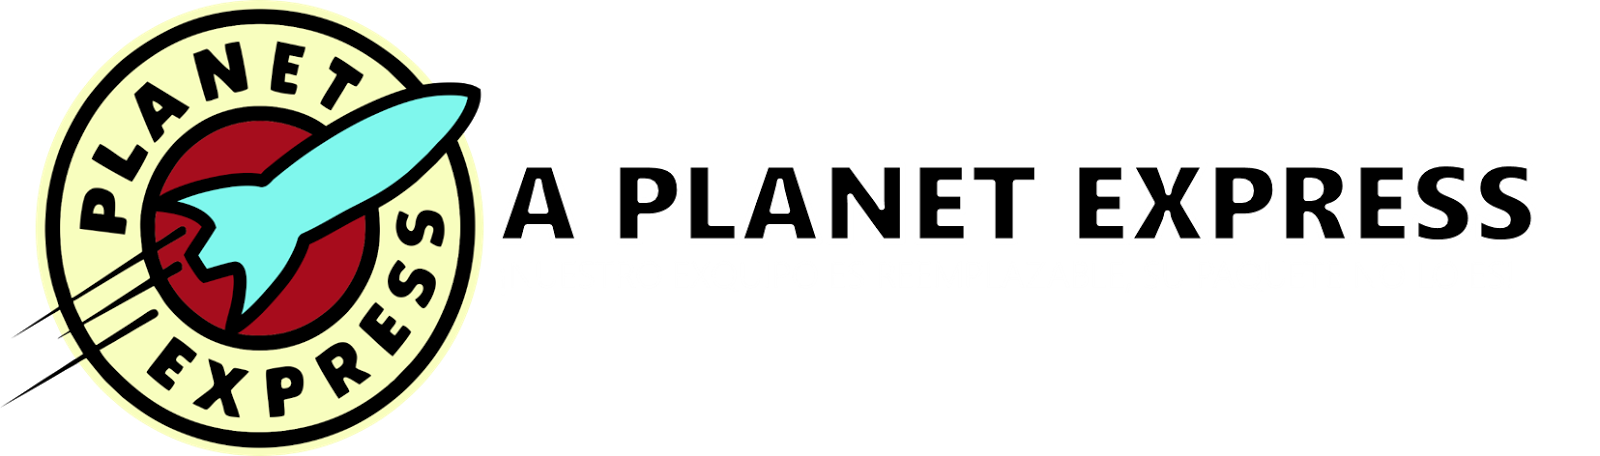 A Planet Express